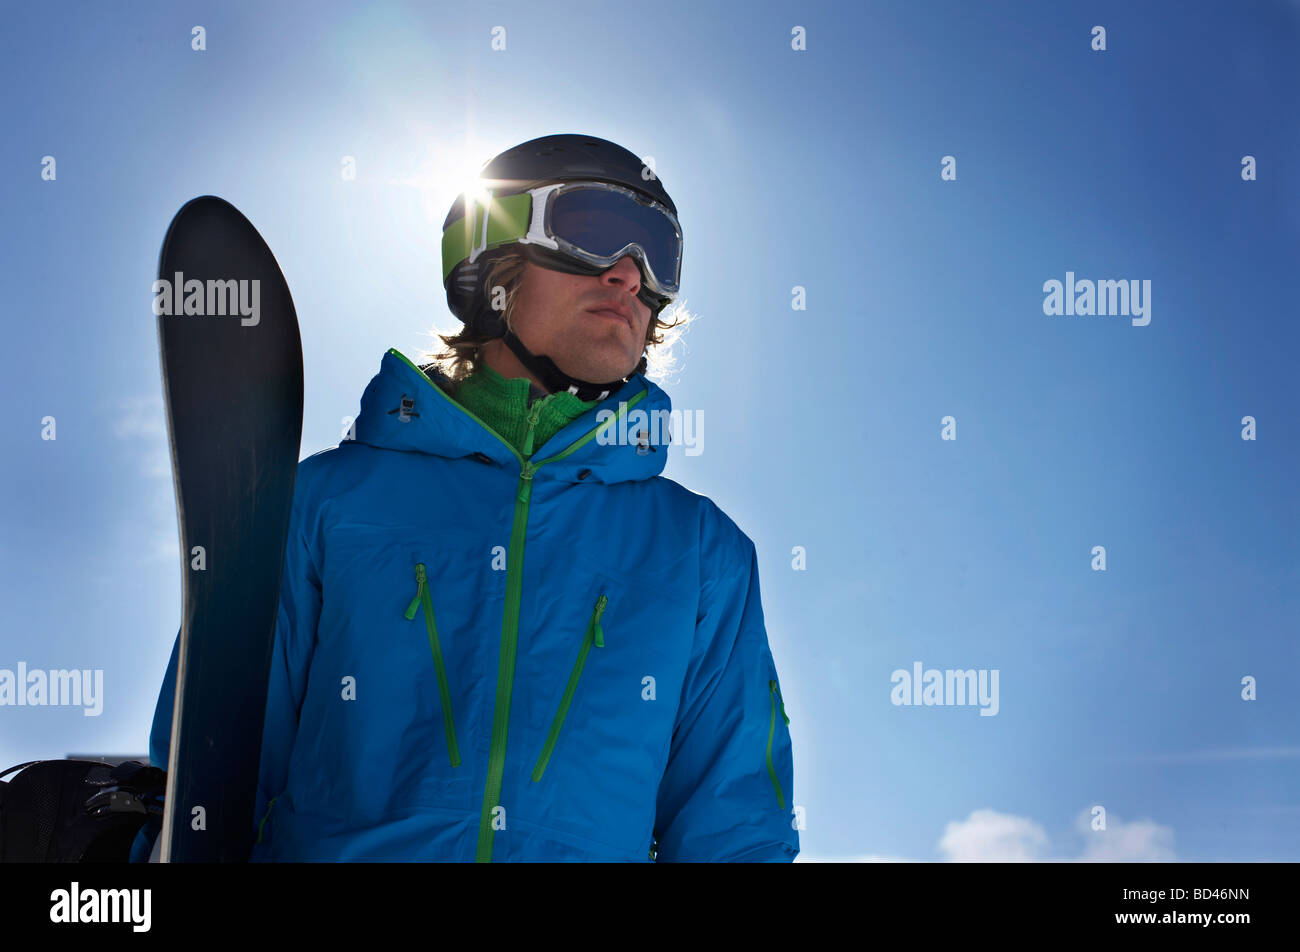 Snowboarder, St. Moritz, Grisons, Switzerland, Europe Stock Photo